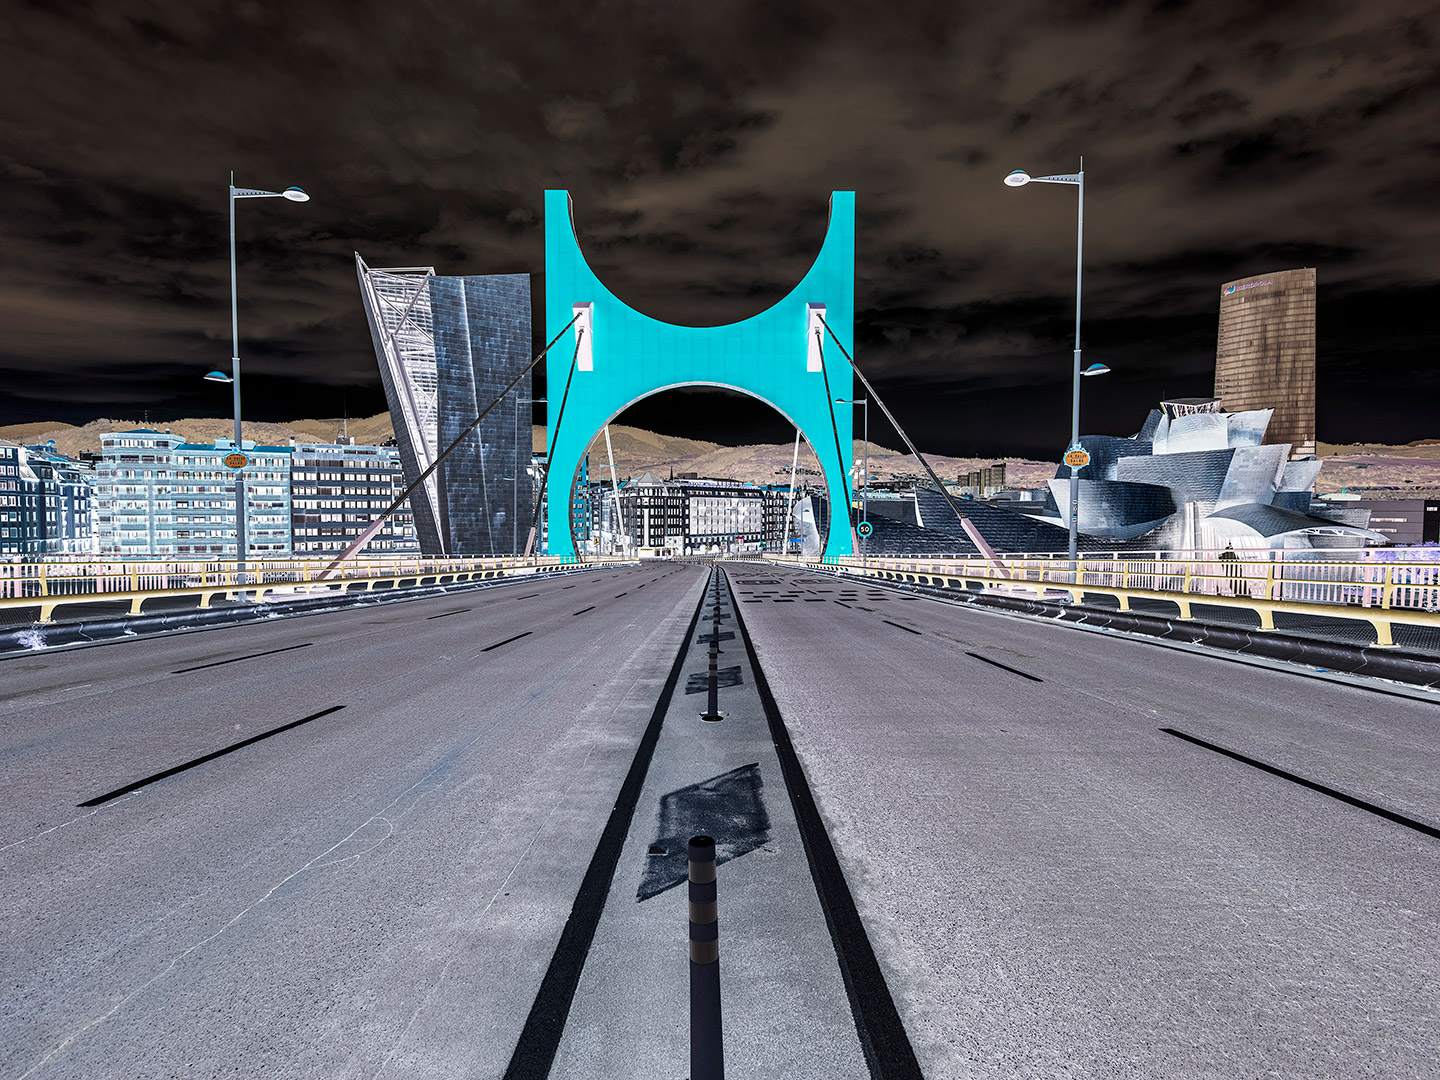 La Salve bridge, Bilbao 04-10-2020 11:15 am </br>(Puente de La Salve, Bilbao 10-04-2020 11:15 h) - Direct printing on Dibond